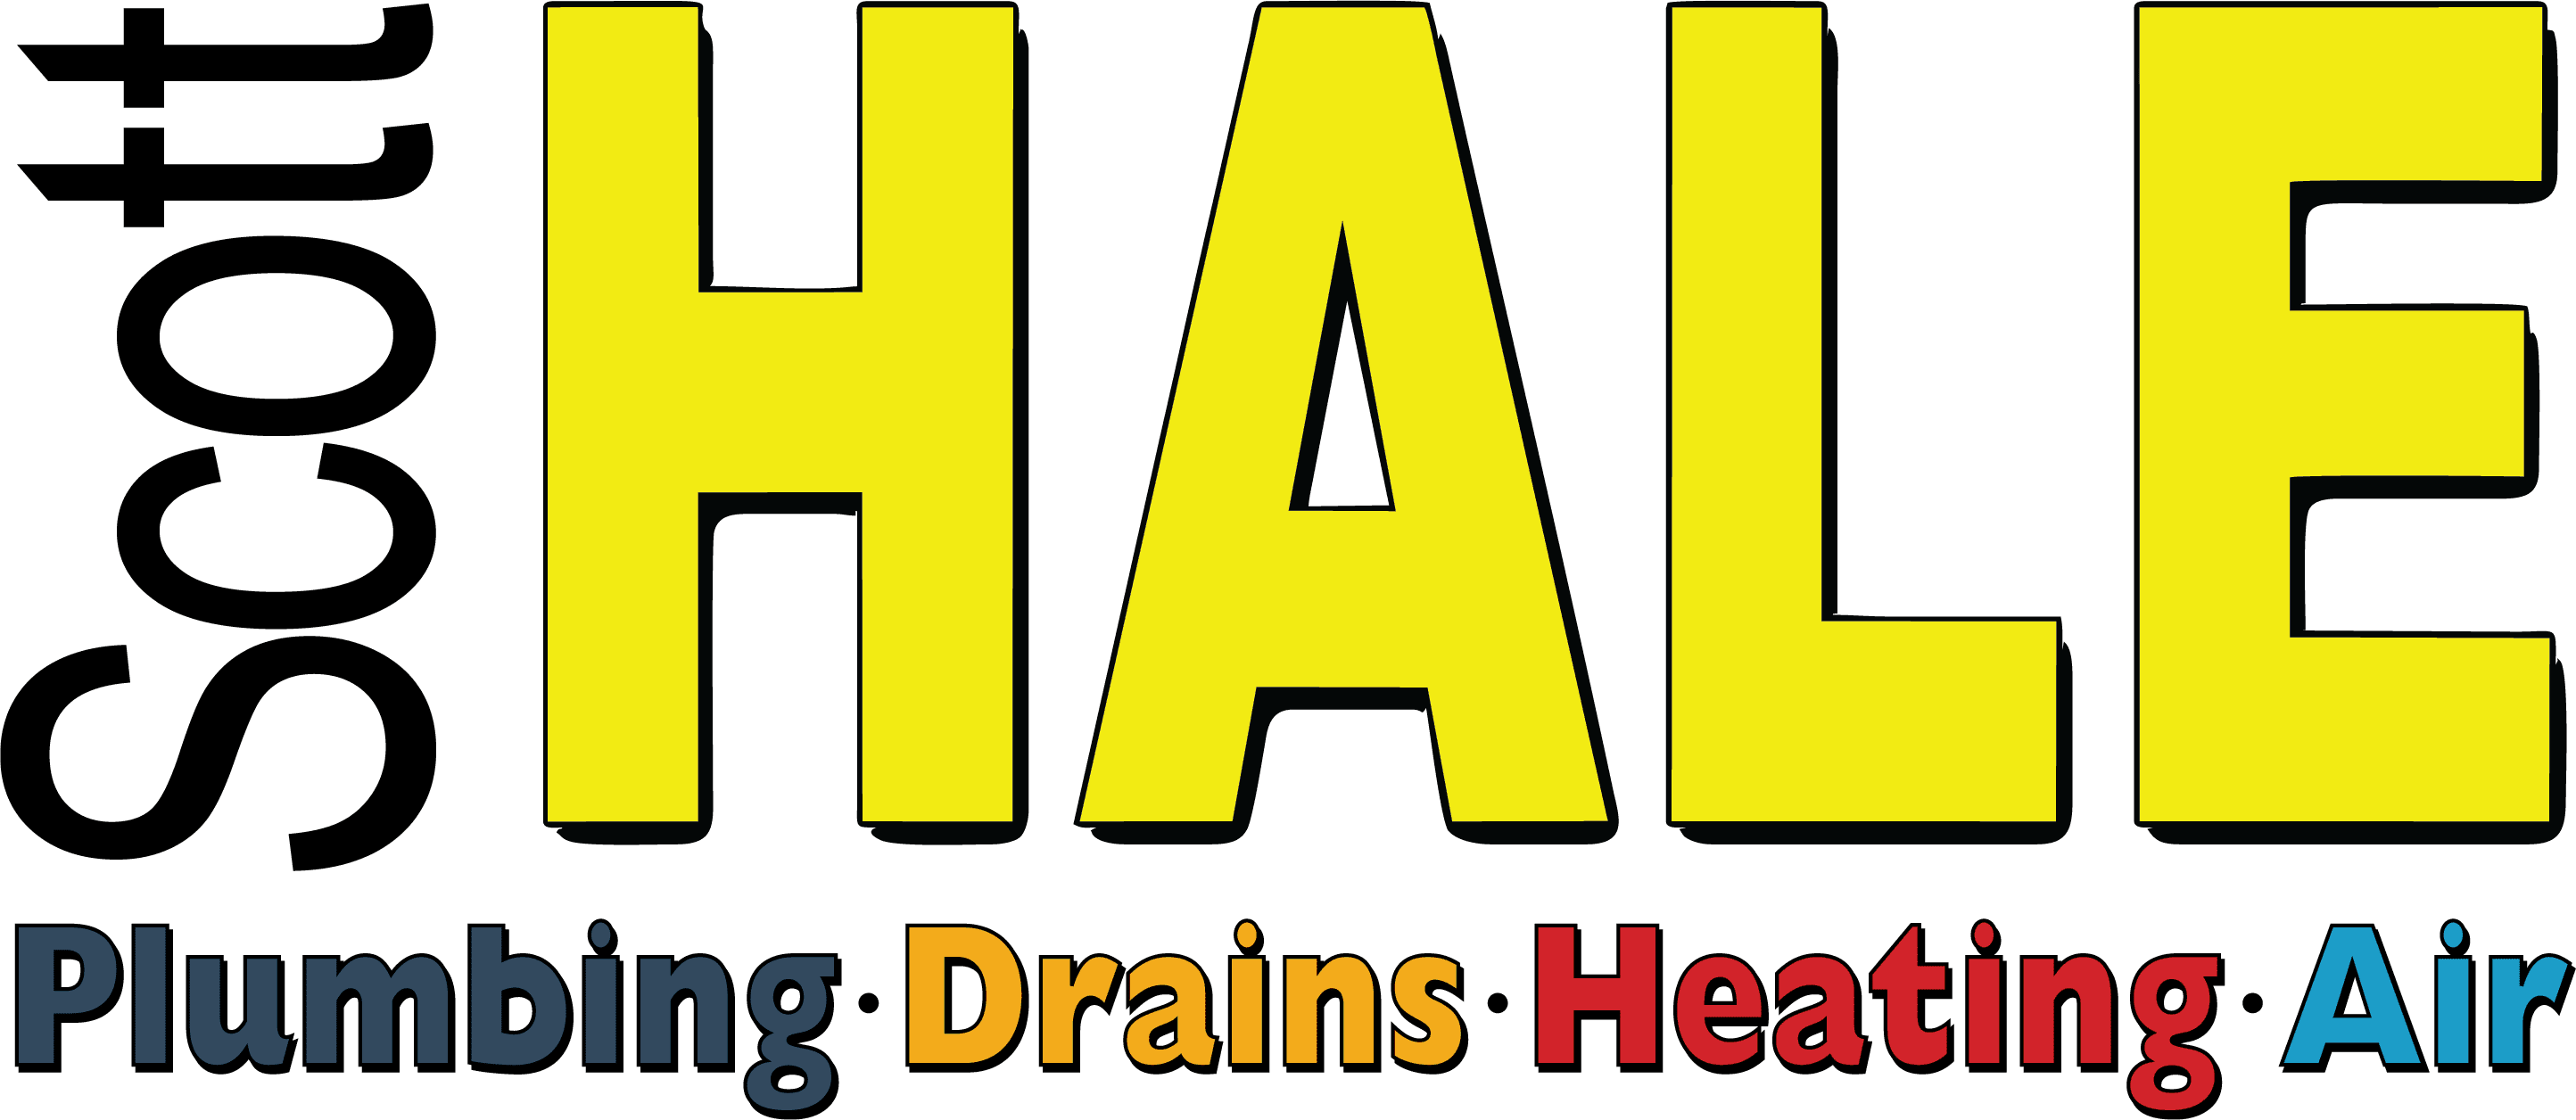 Scott Hale Plumbing, Drains, Heating & Air logo